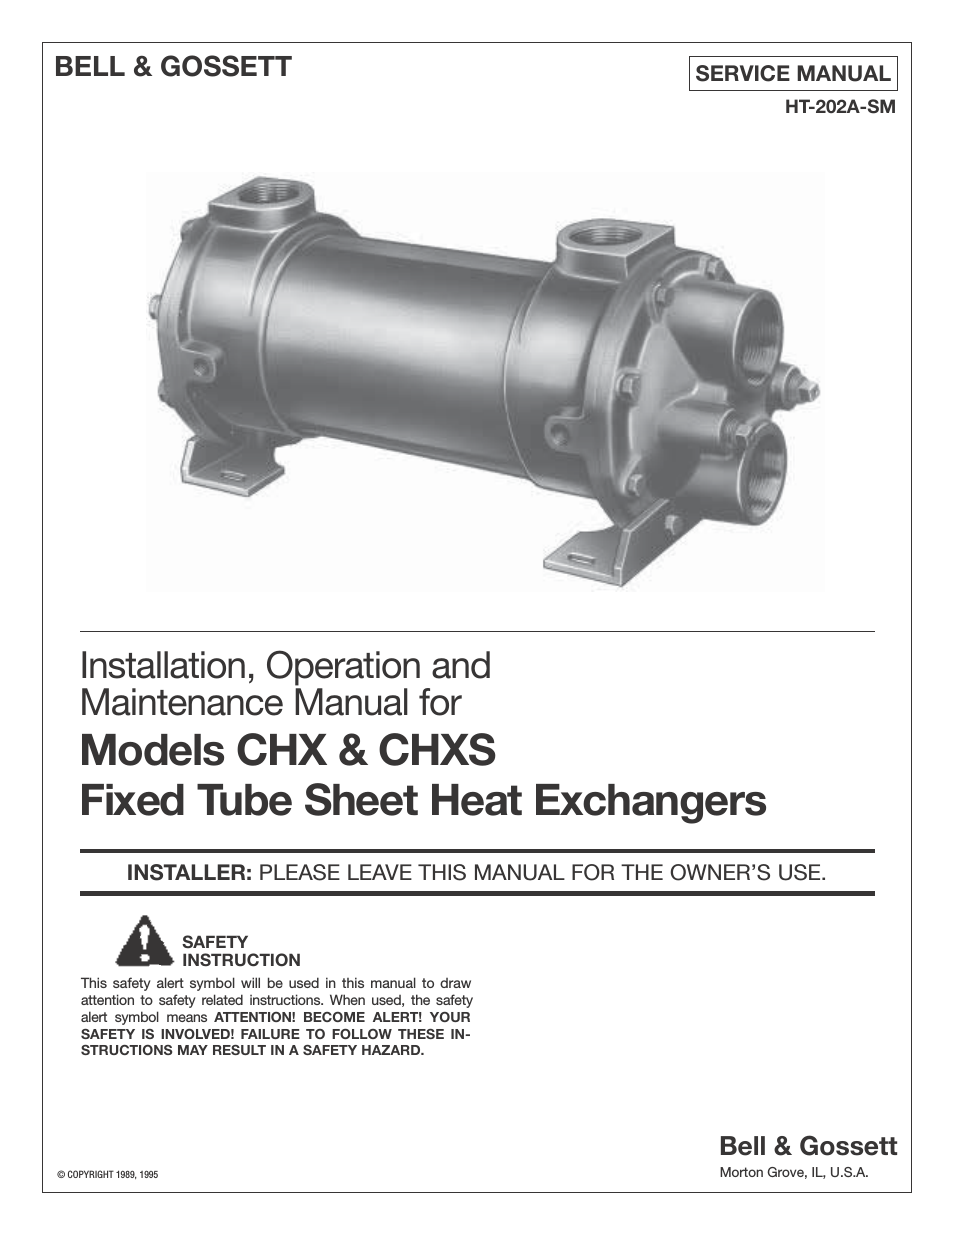 HT 202A SM Models CHX Fixed Tube Sheet Heat Exchangers